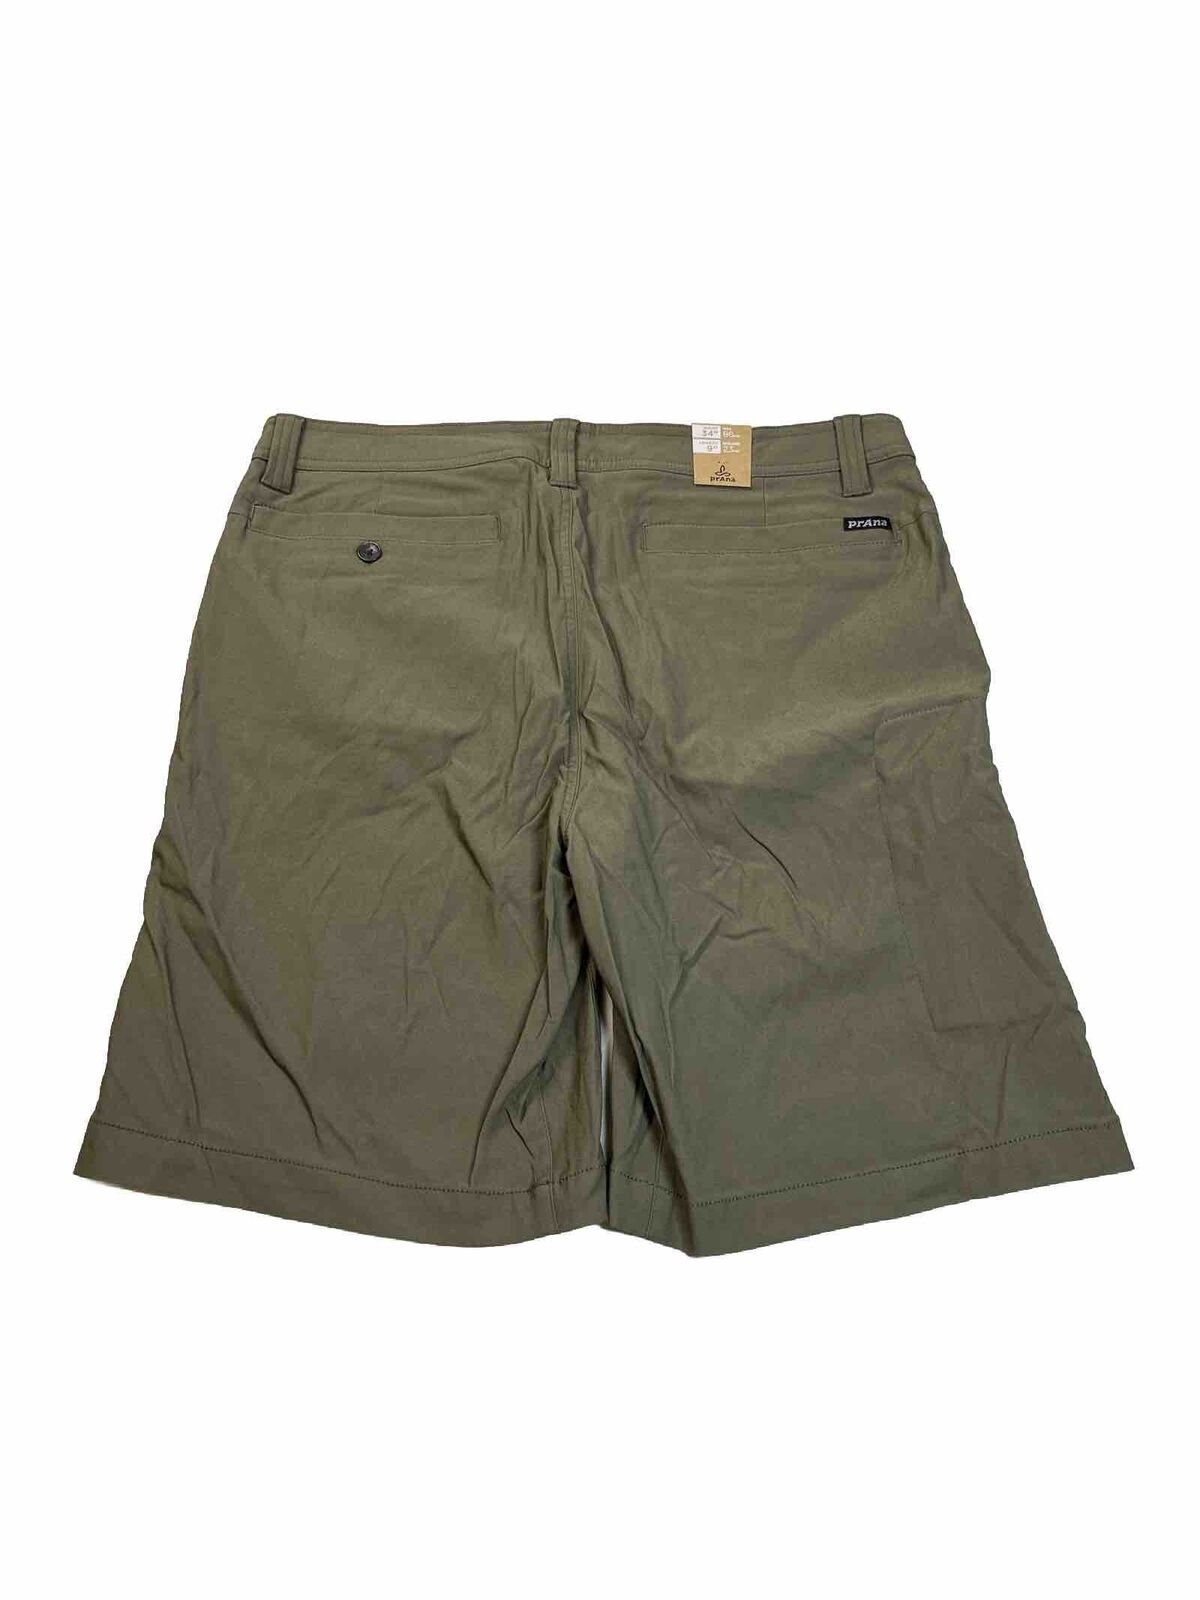 NEW PrAna Men's Green Alameda Everyday Essential Shorts - 34